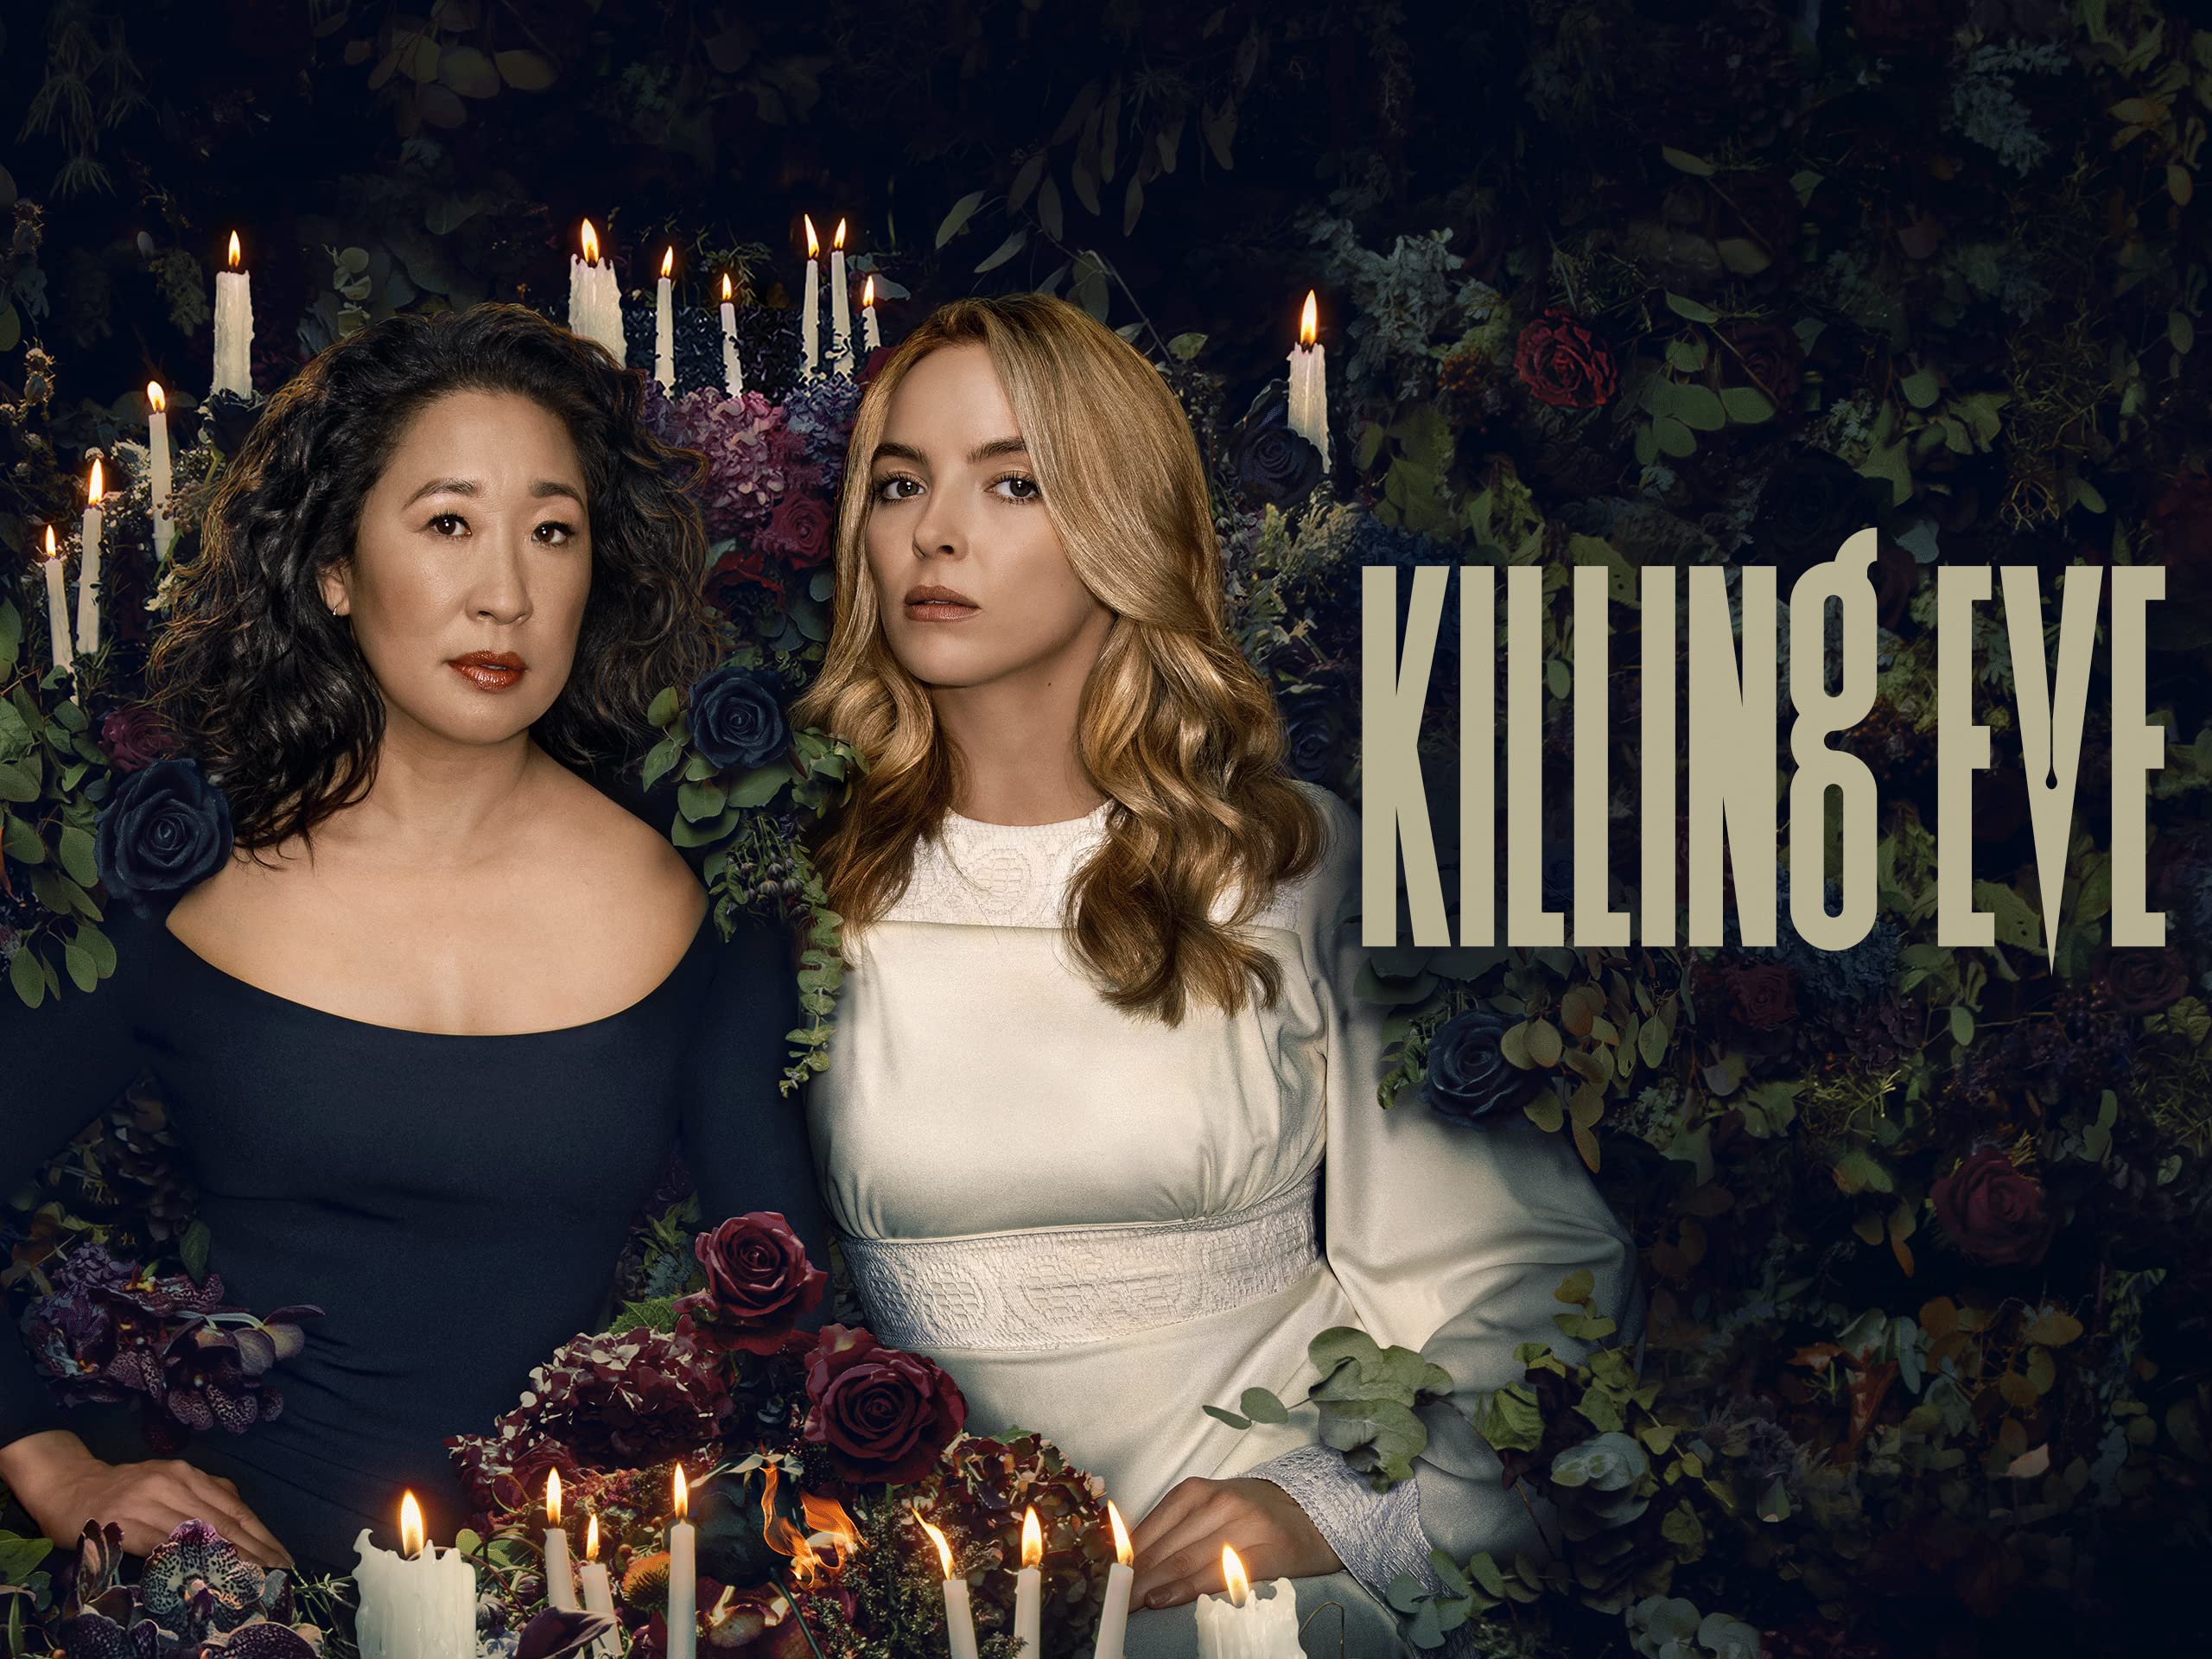 Killing Eve Season 5: What happened Killing Eve Season 4?